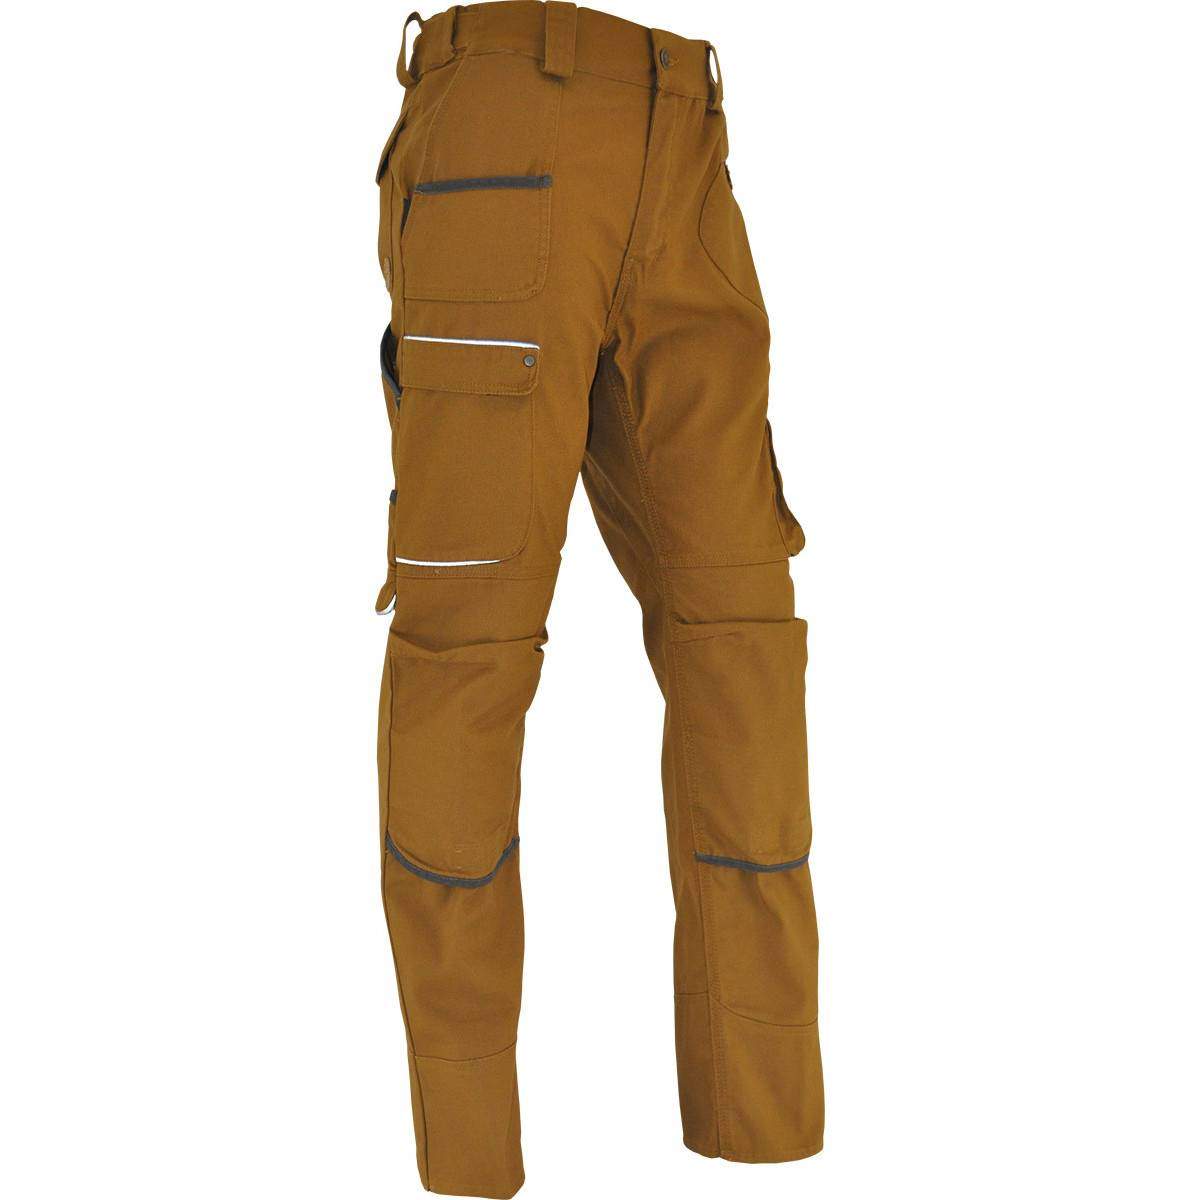 SAHARA work trousers size 38, bronze